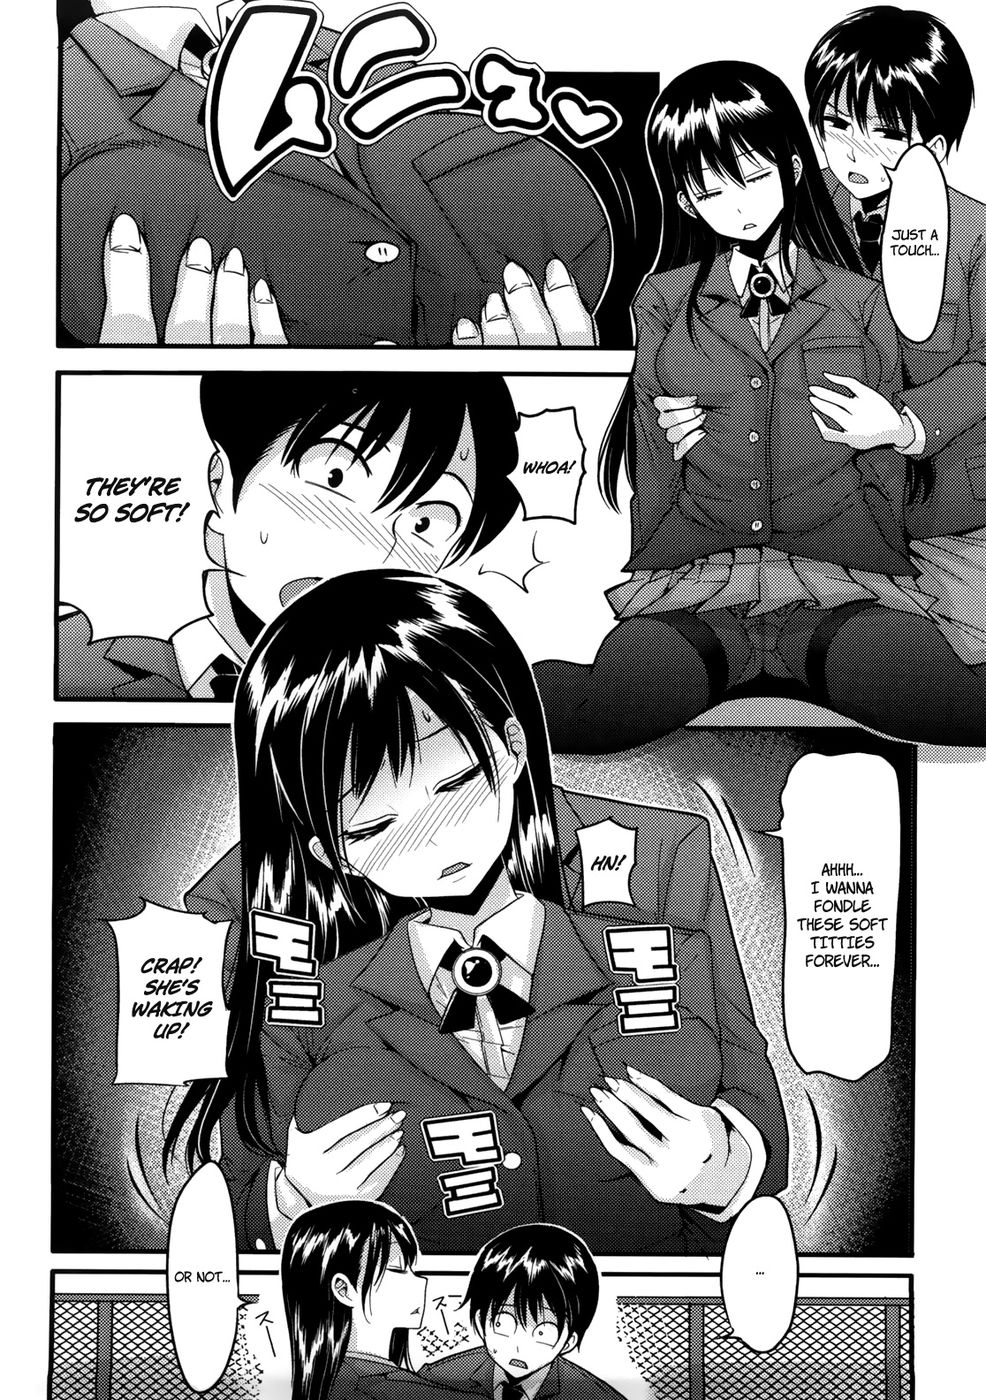 Sleeping porn manga